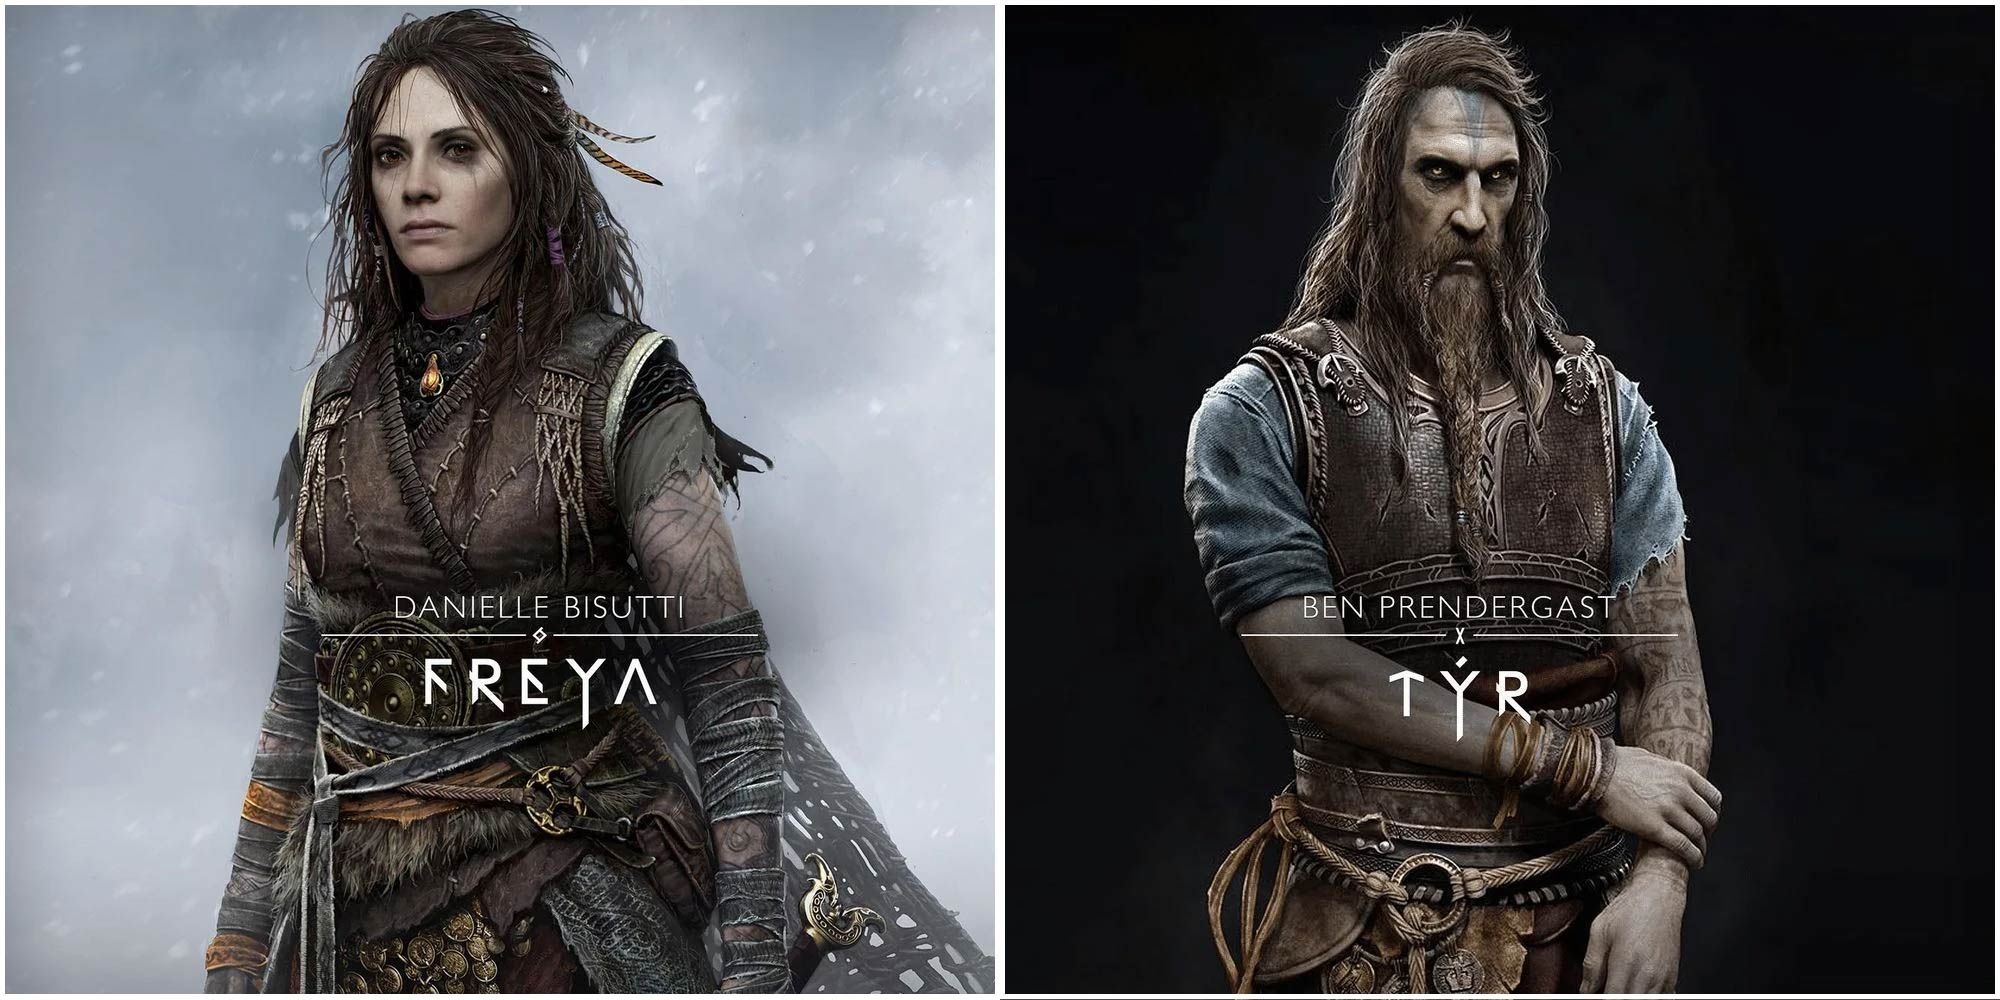 Freya and Tyr, from God of War Ragnarok